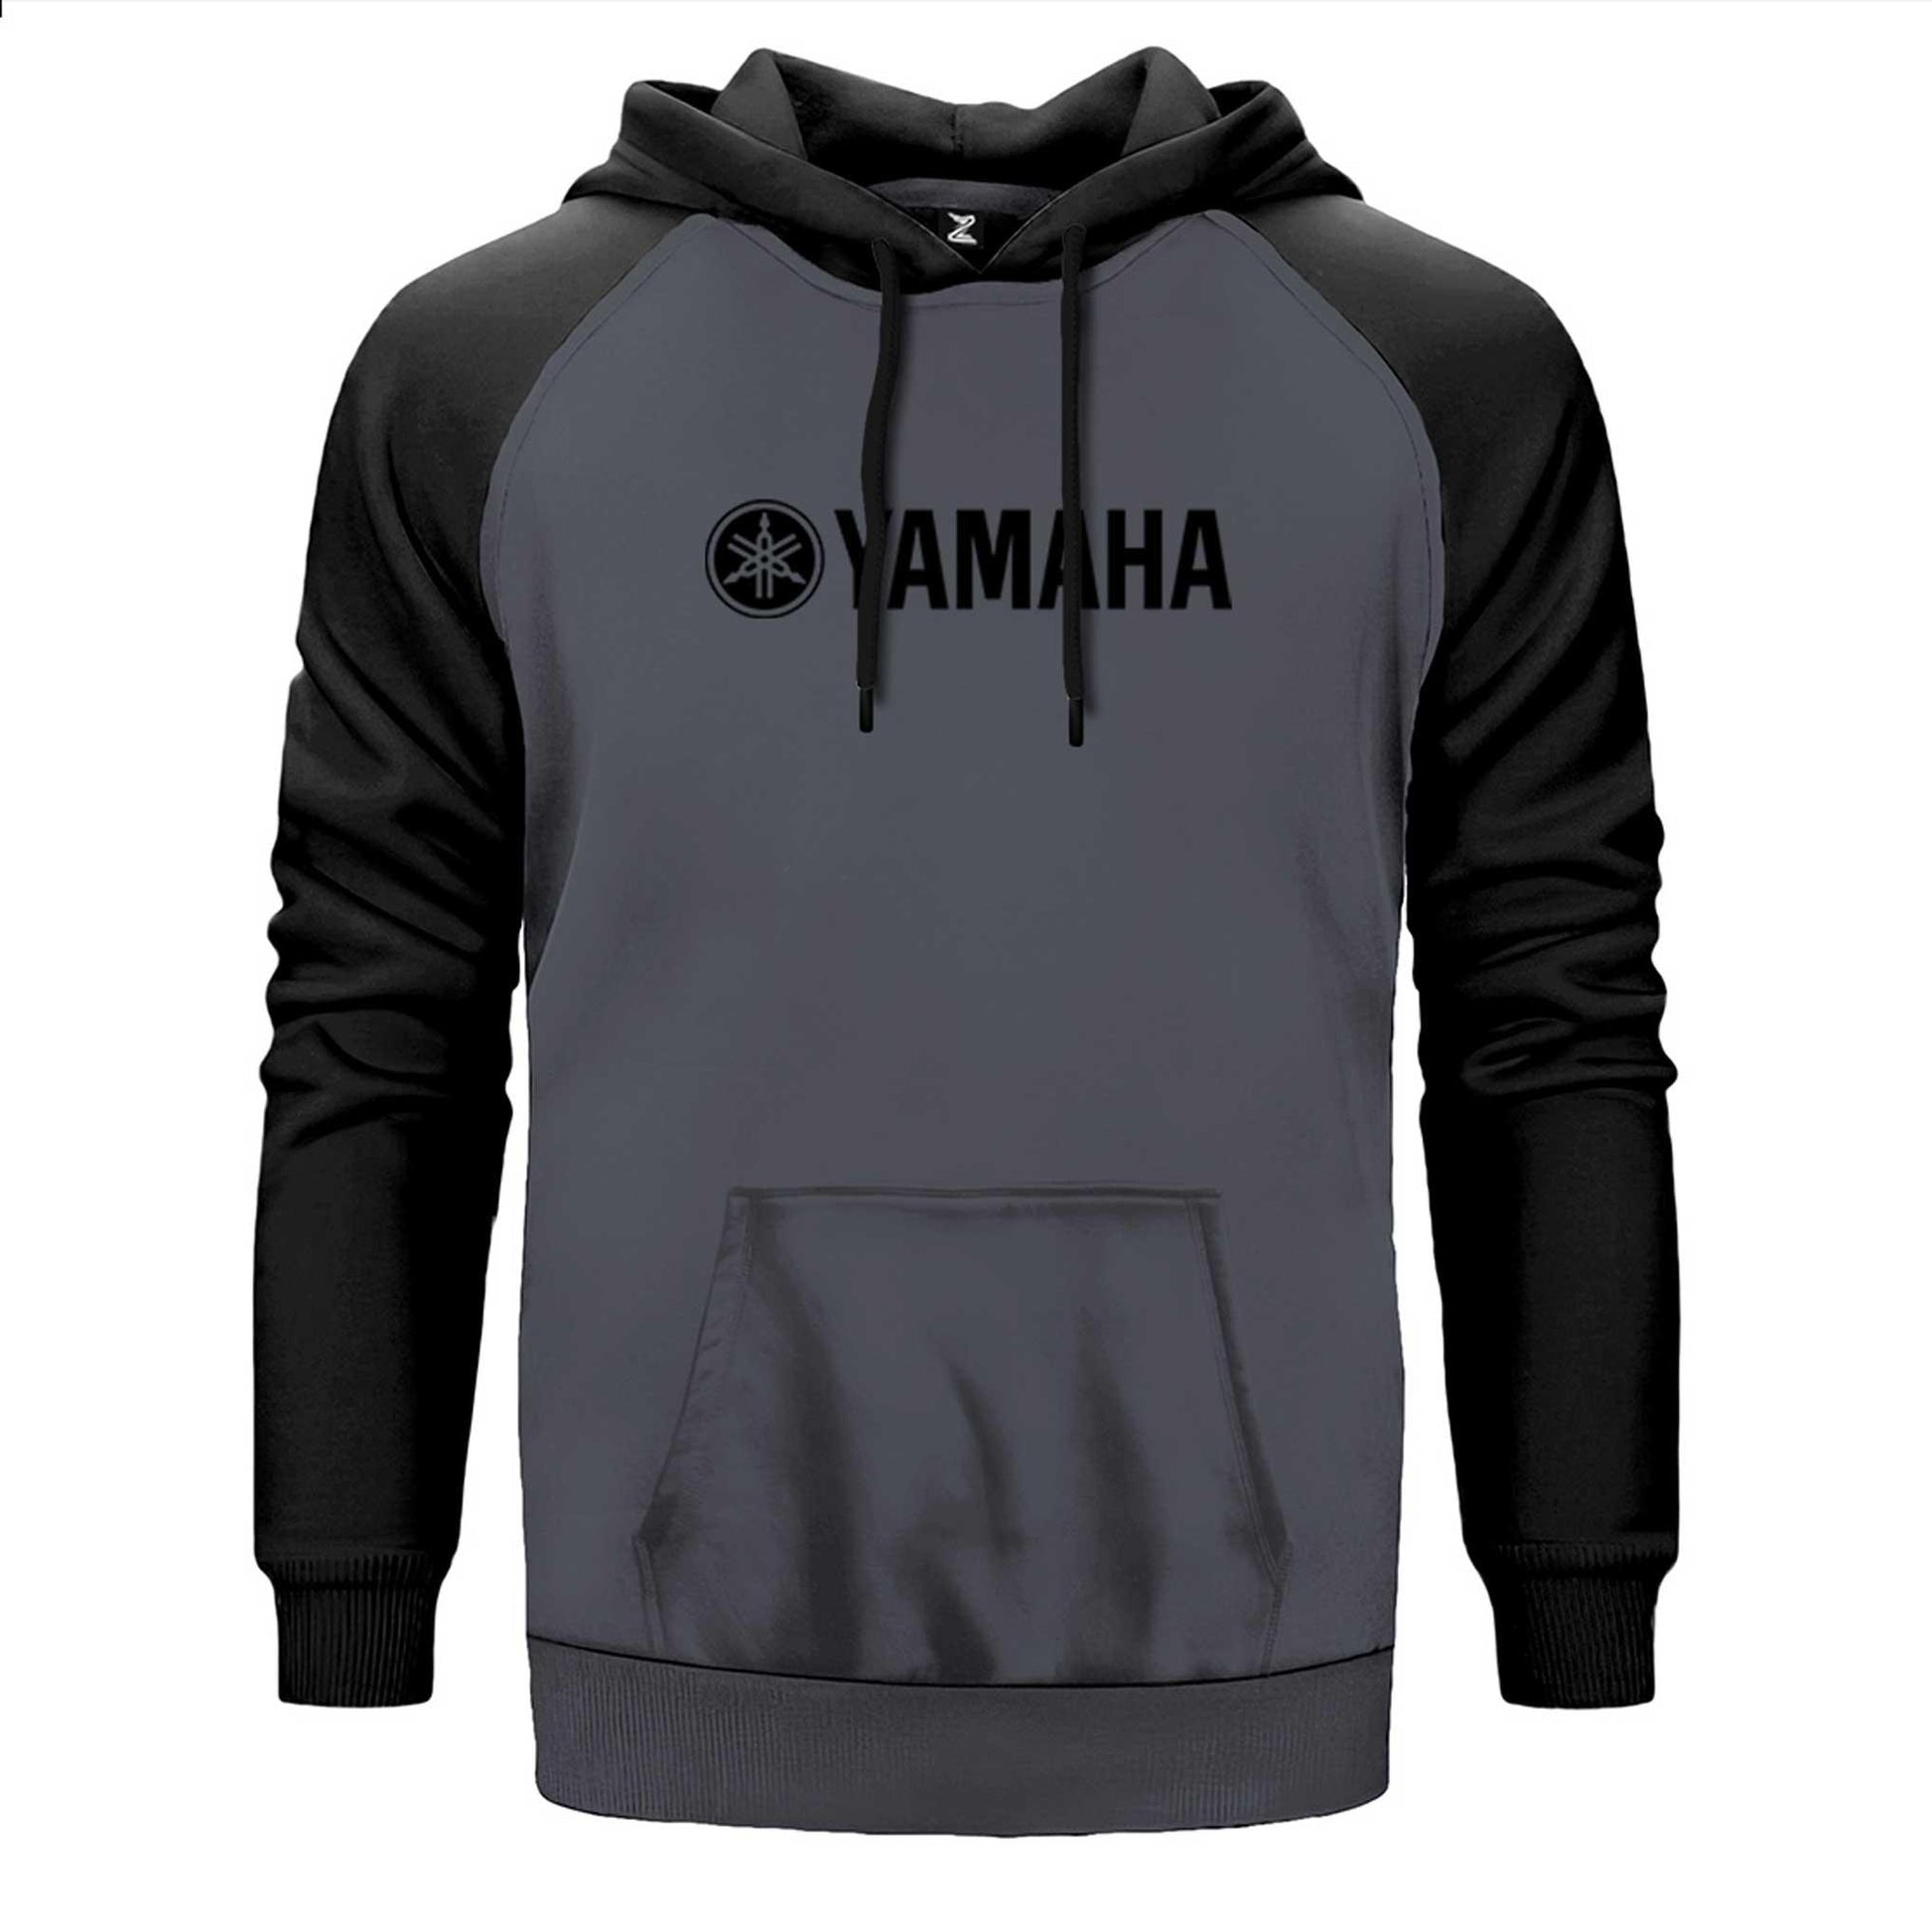 Yamaha LogoText Çift Renk Reglan Kol Sweatshirt - Zepplingiyim